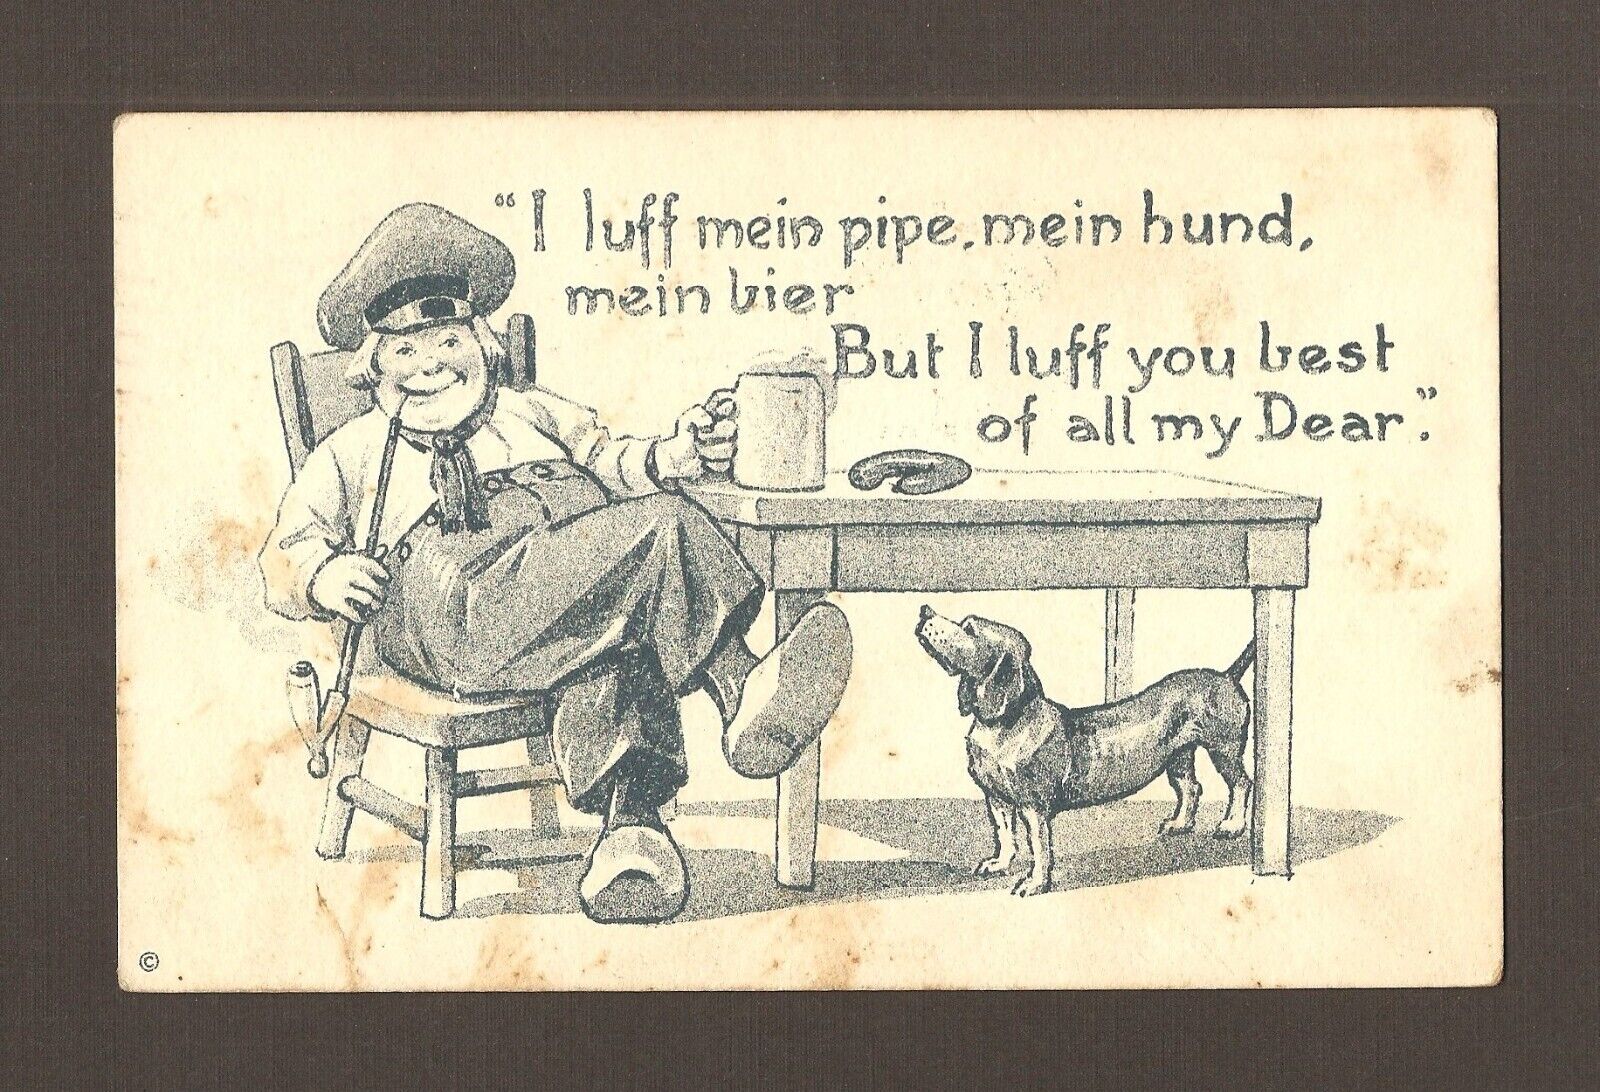 Antique 1912 Postcard Valentine's Day Card Dutch Love Poem Wooden Shoes Pipe Dog